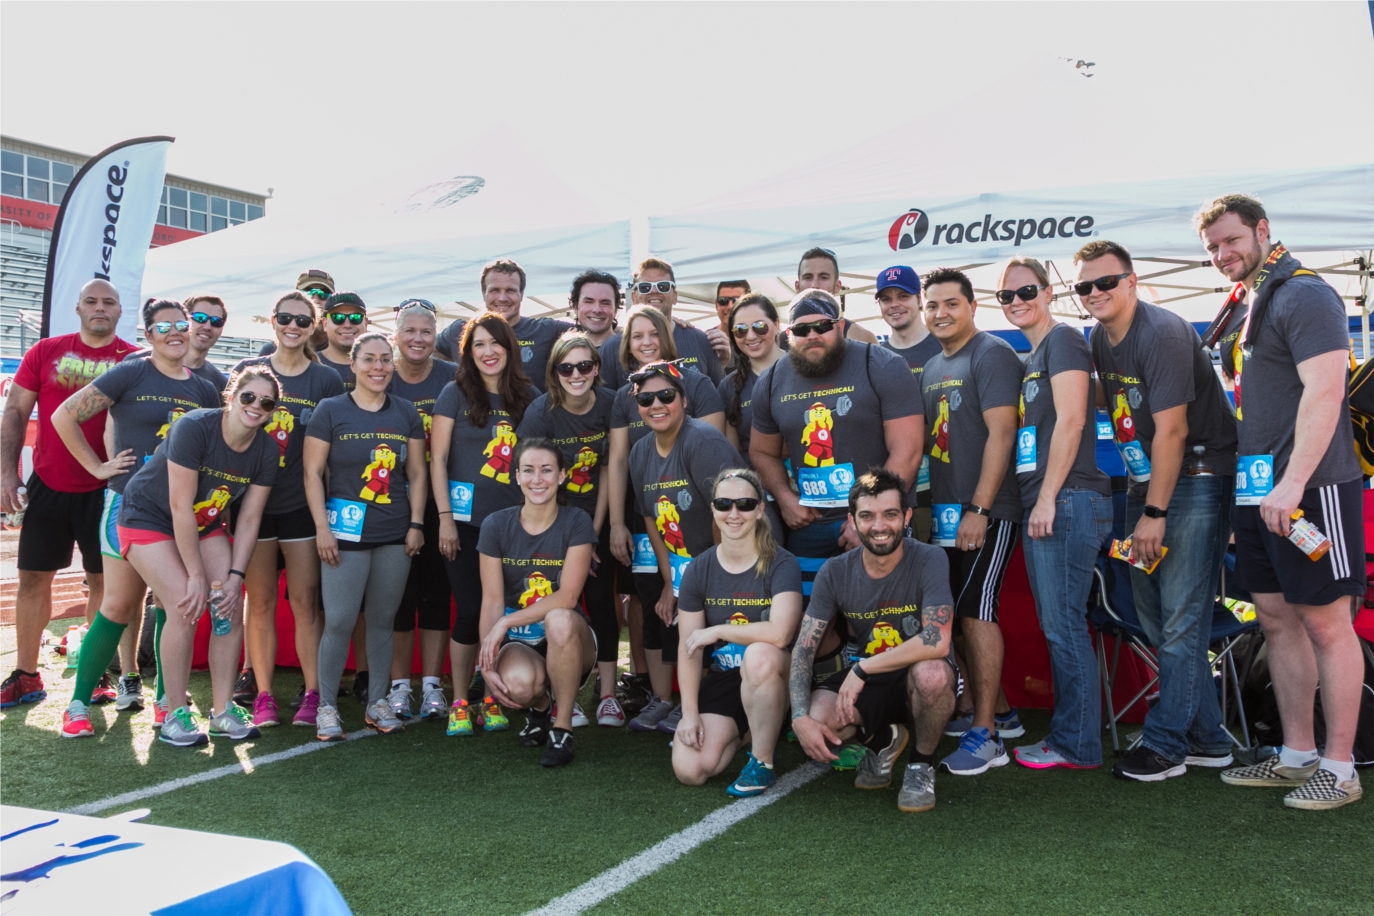 Team Rackspace at the Annual San Antonio Corporate Cup tournament